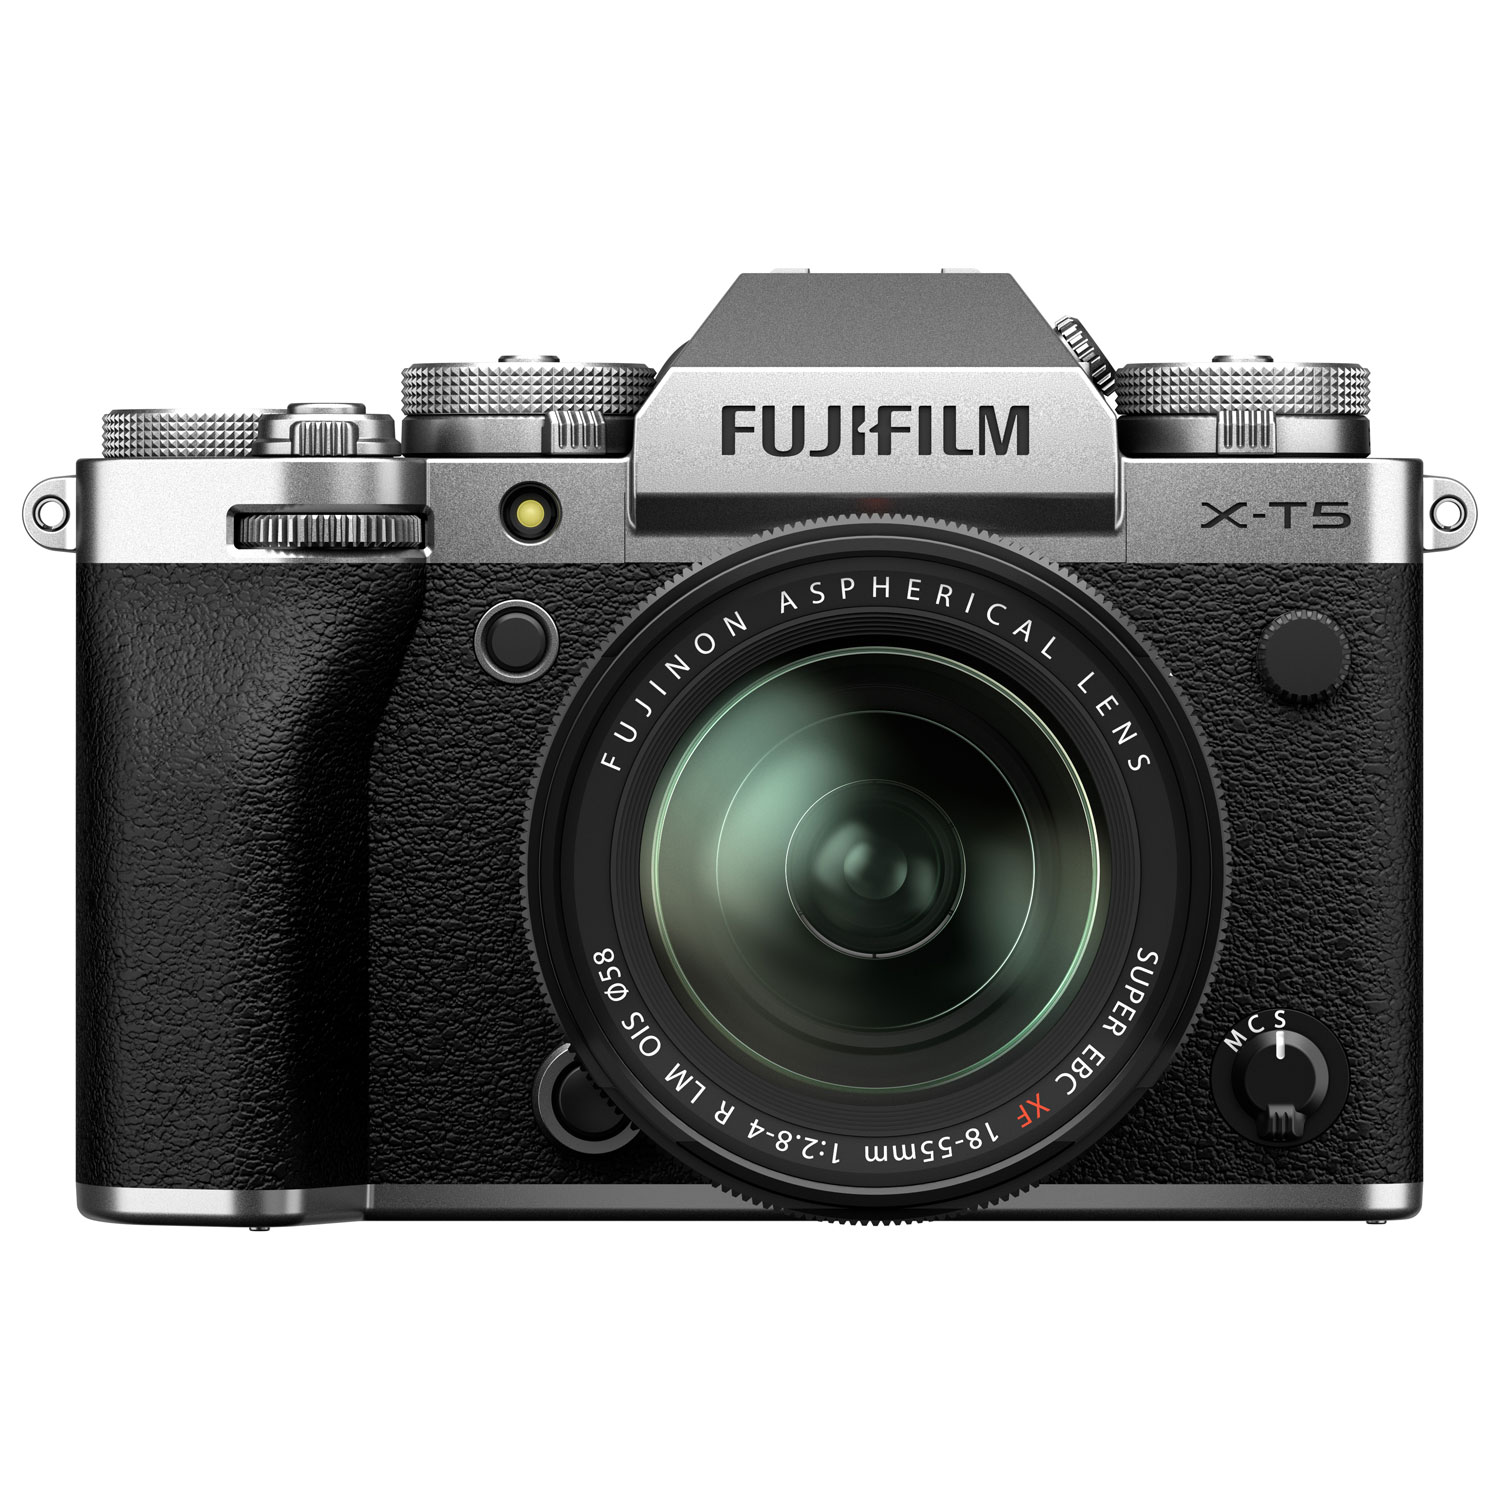 Fujifilm X-T5 Mirrorless Camera with XF 18-55mm f/2.8-4 R LM OIS Lens Kit - Silver